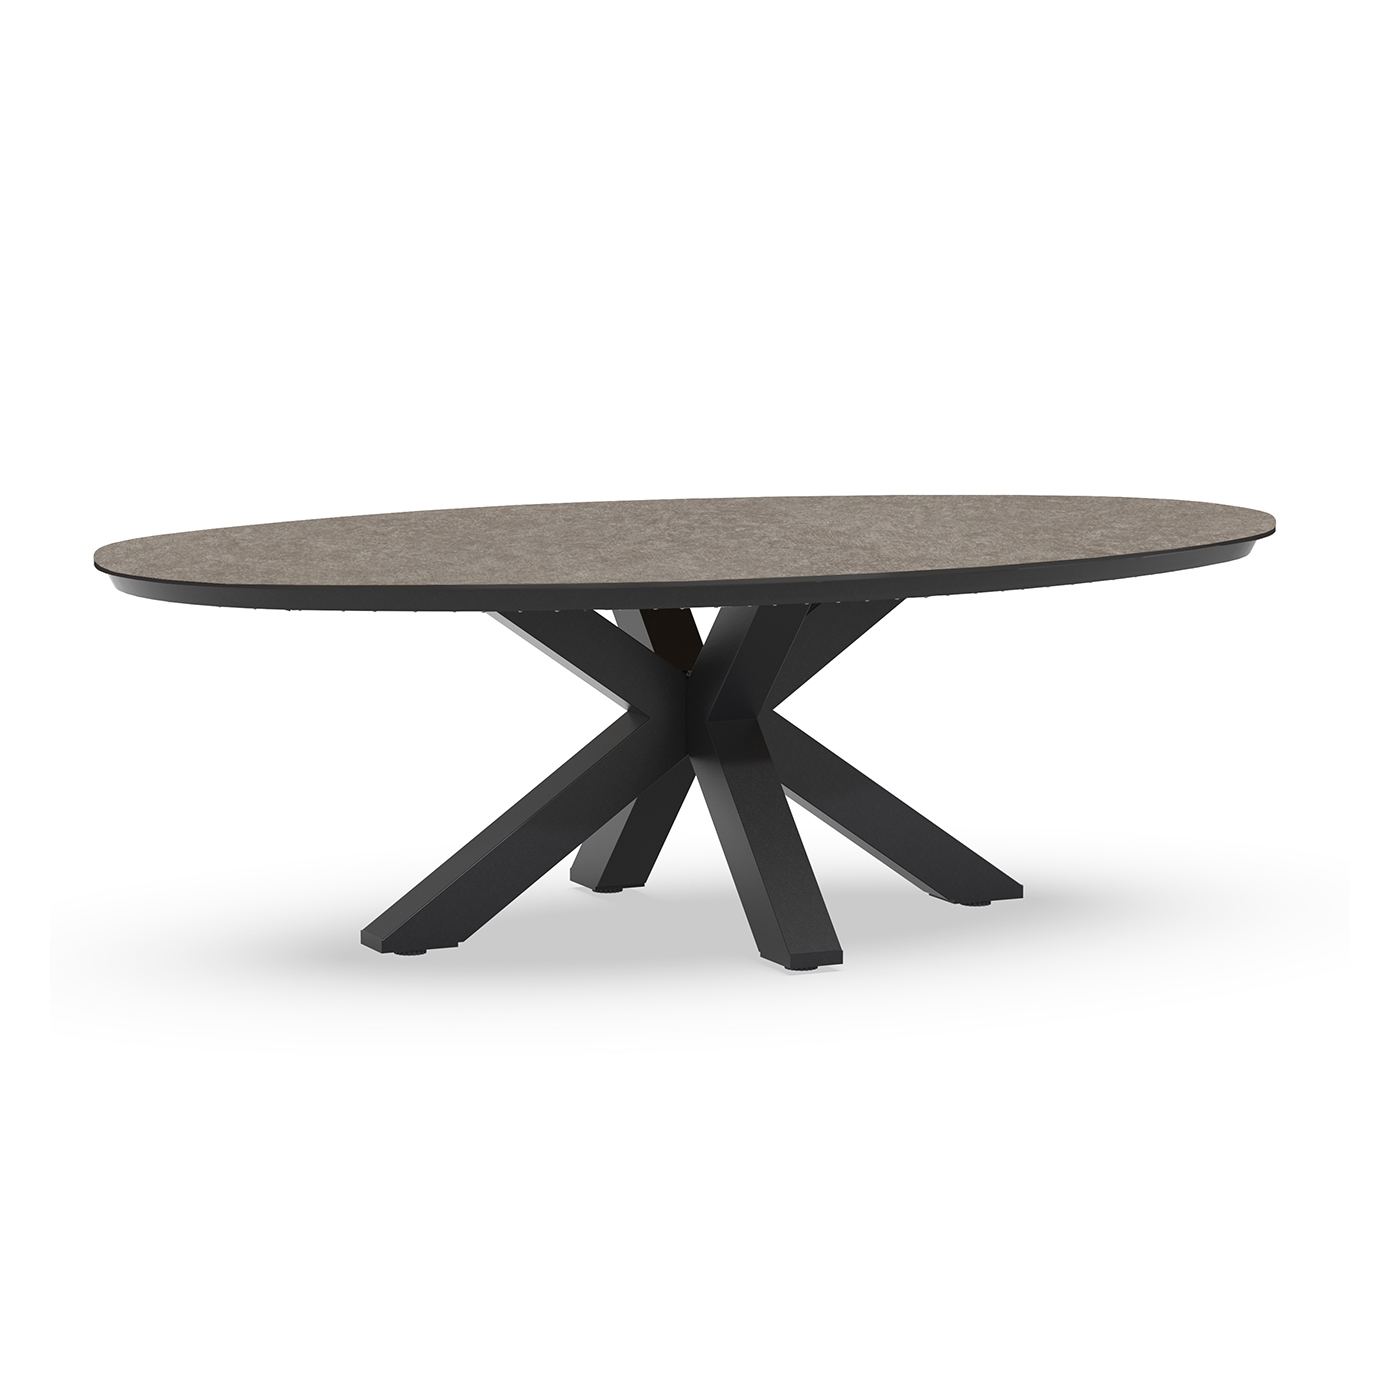 Oblong Low Dining Table Trespa Dark Basalt 220 x 130 cm Charcoal